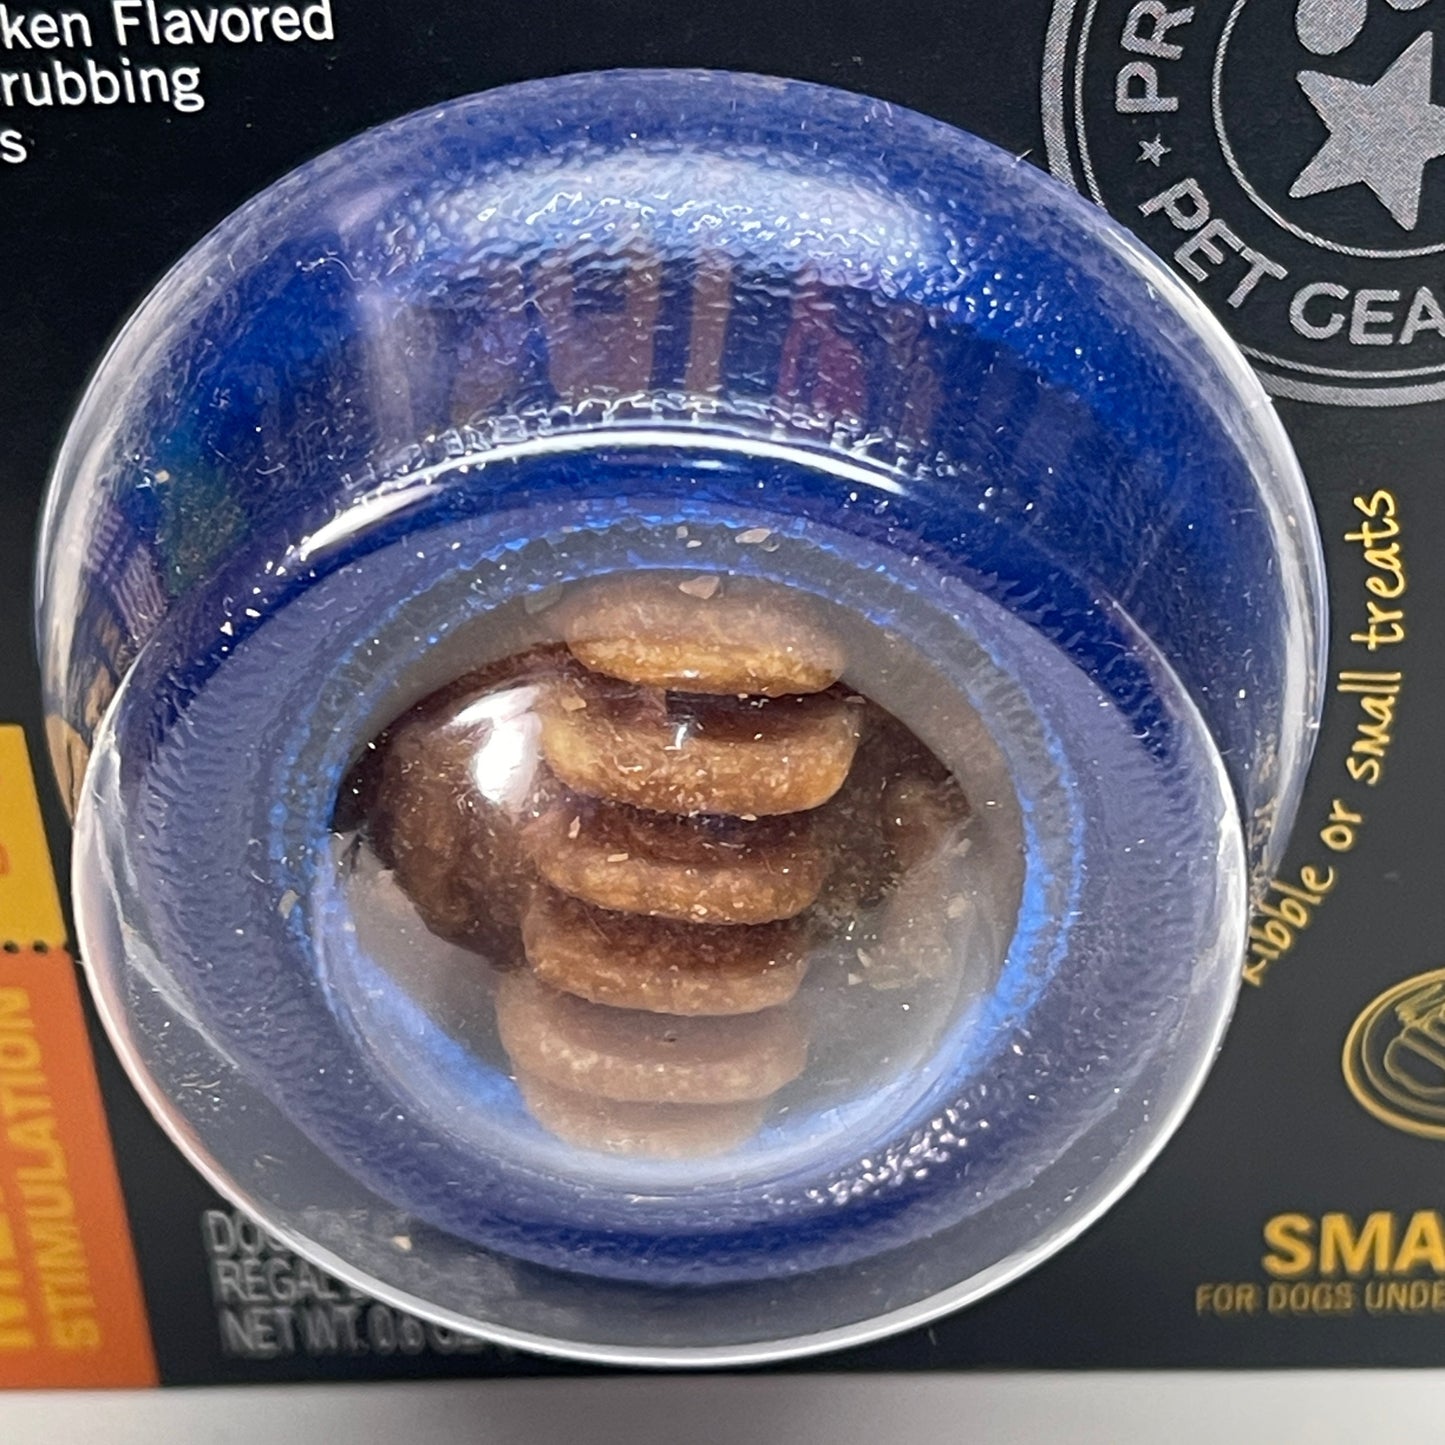 STARMARK Everlasting Dog Treat Ball Small 0.6 oz Blue EXP 03/27 SMTBSDT